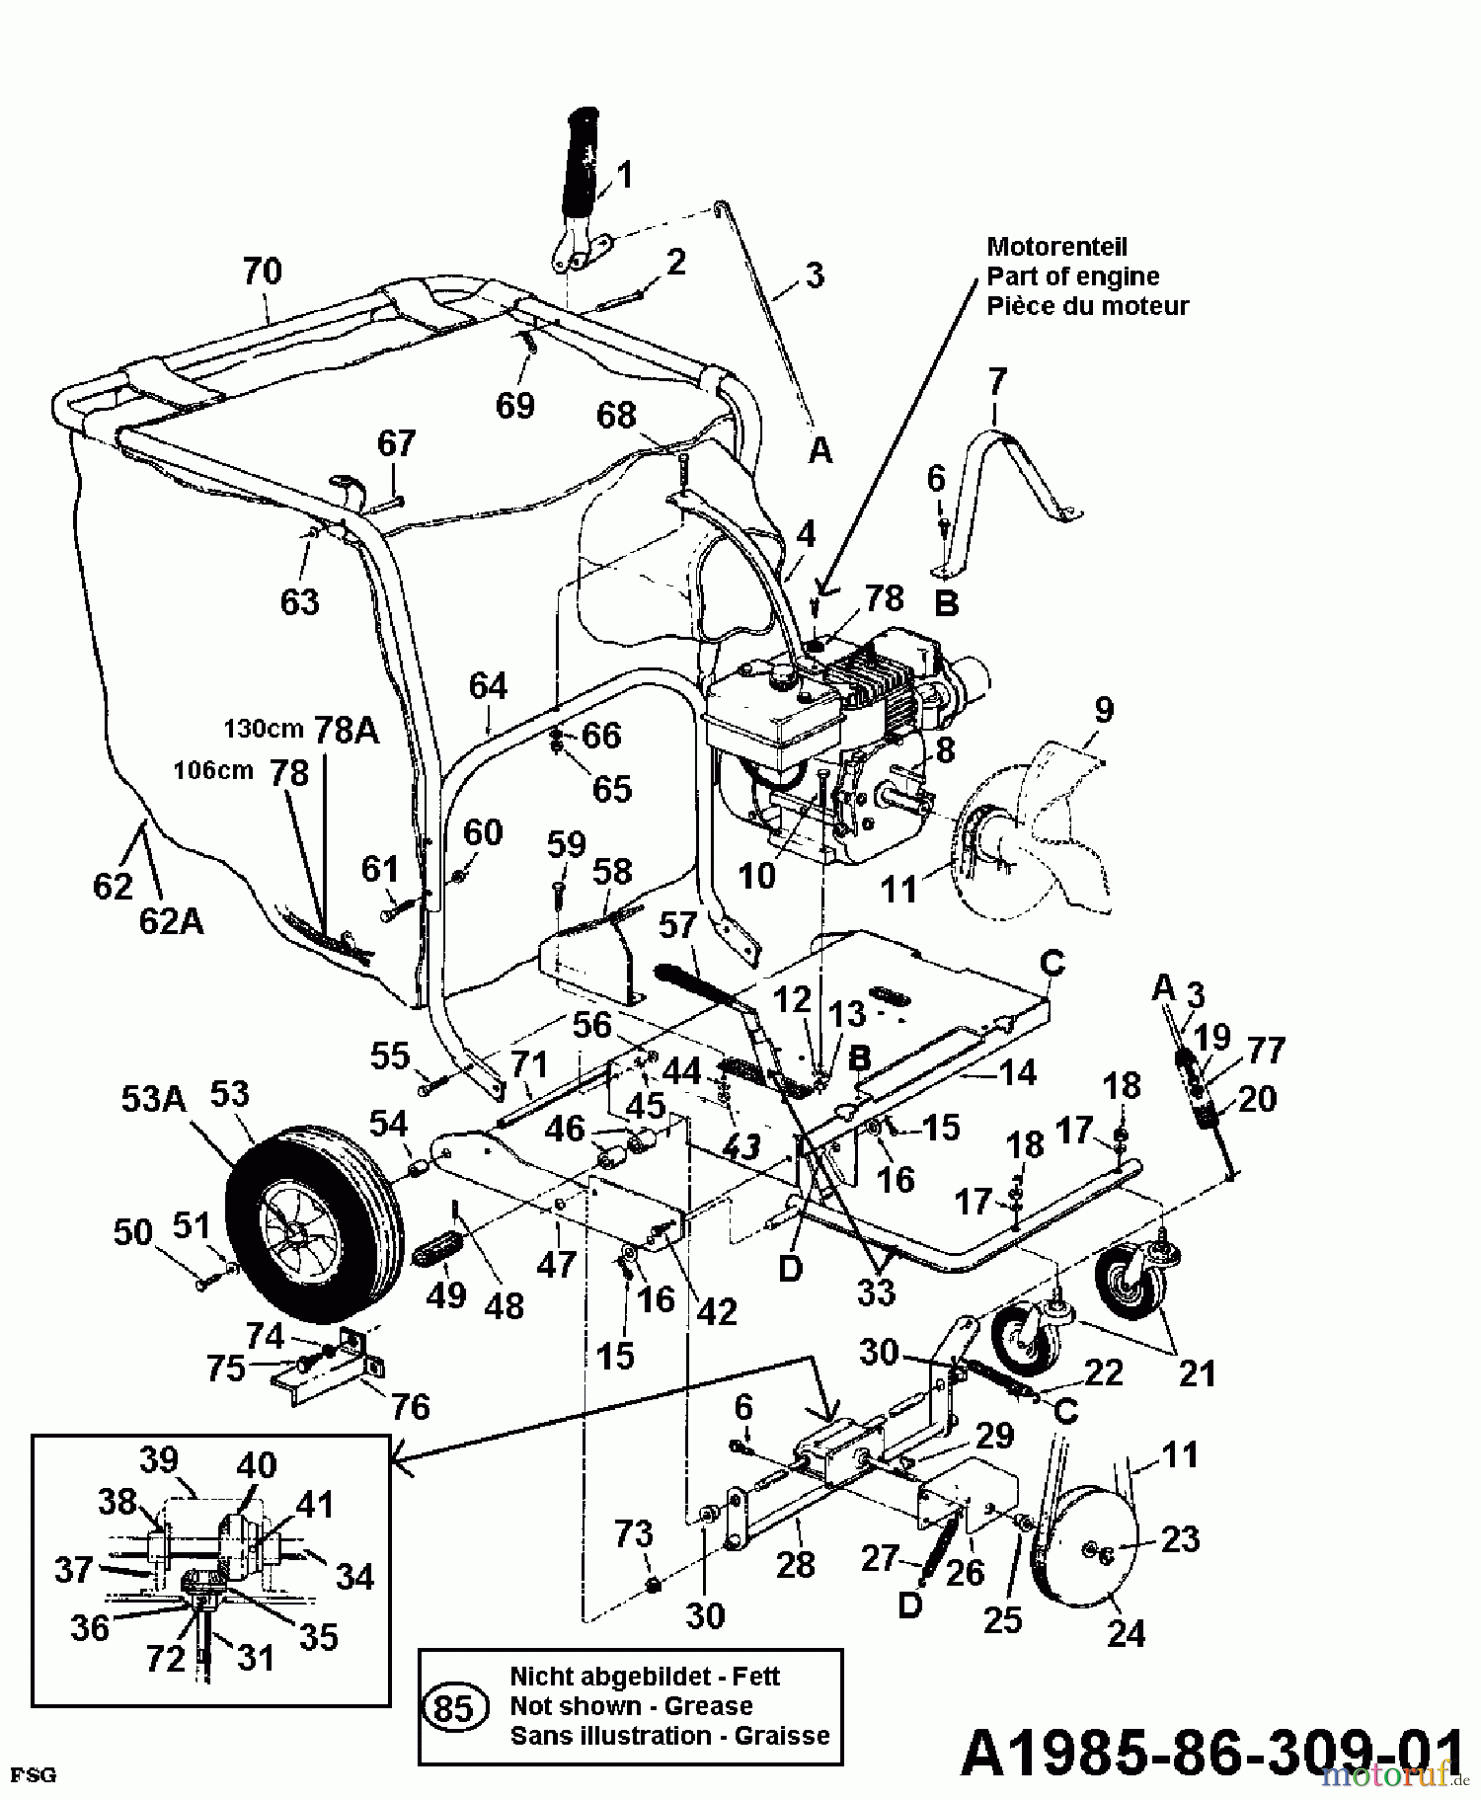  MTD Leaf blower, Blower vac 685 246-685-000  (1986) Basic machine